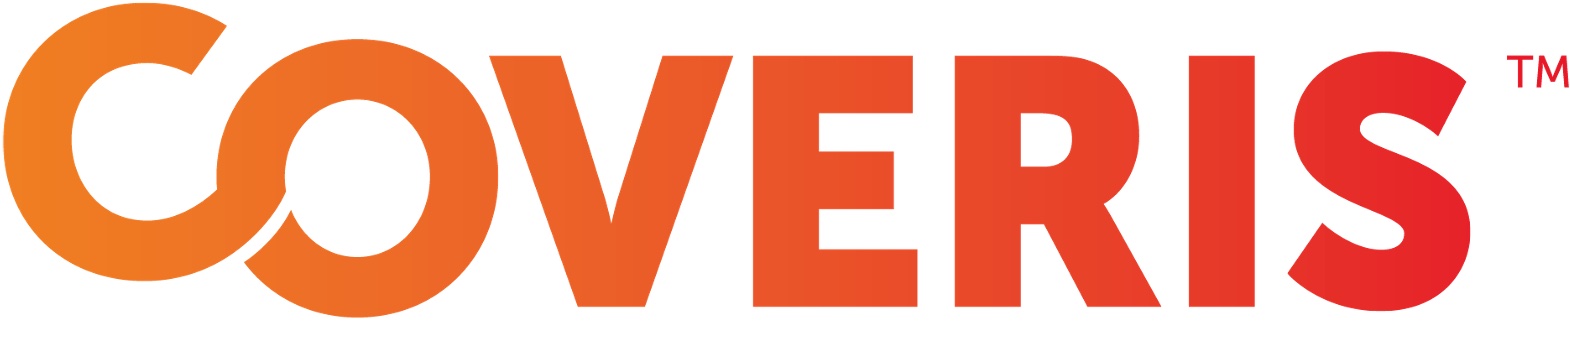 Coveris Logo